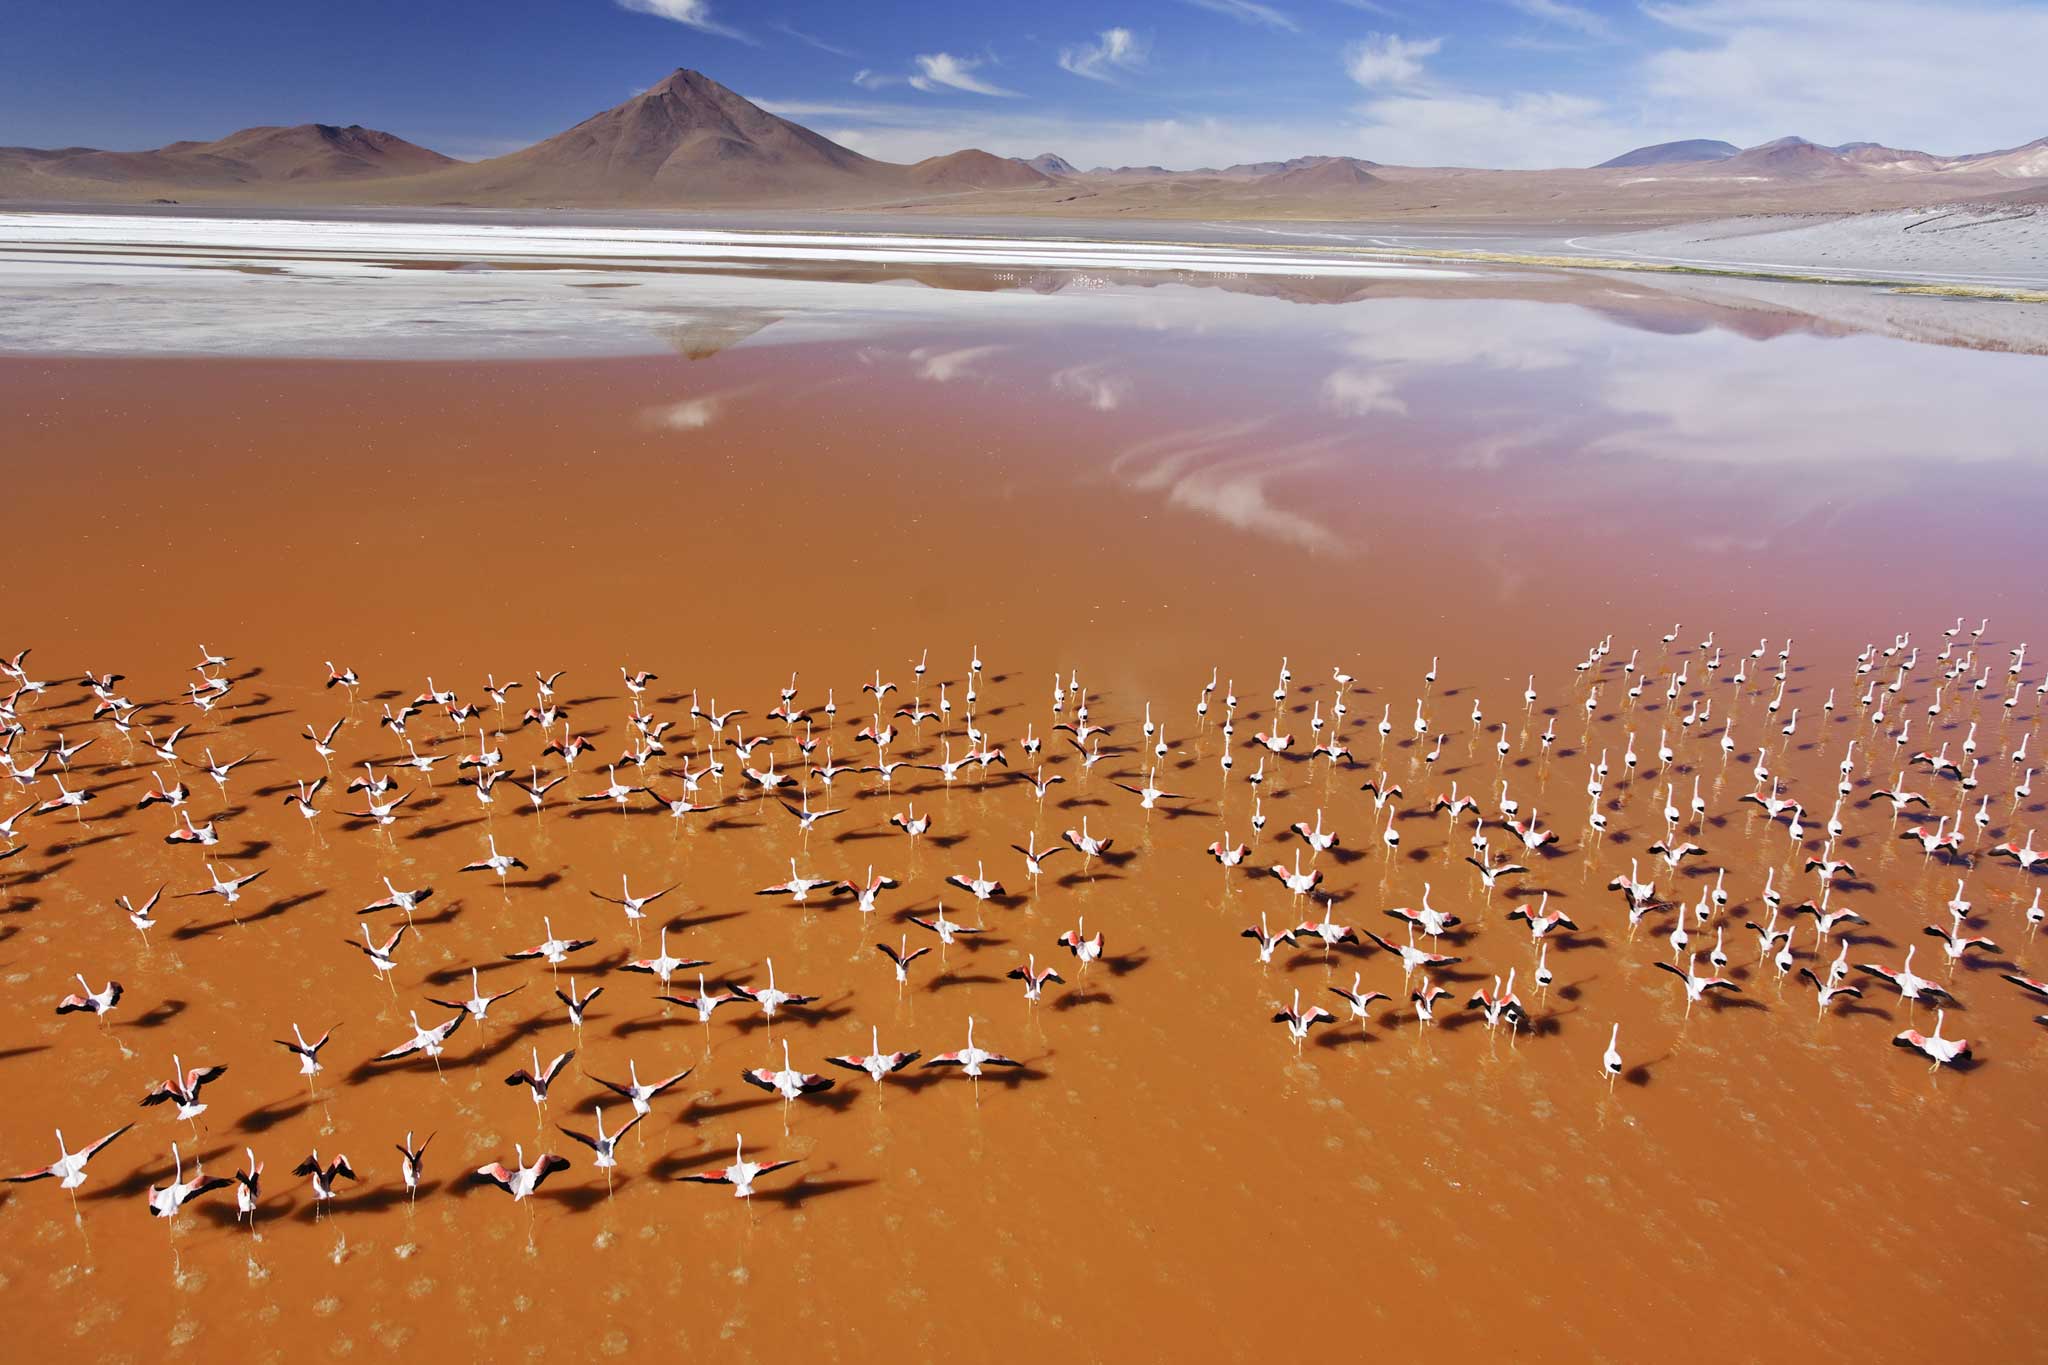 Steinmetz's favourite image was this shot of Lake Laguna Colorada in Bolivia